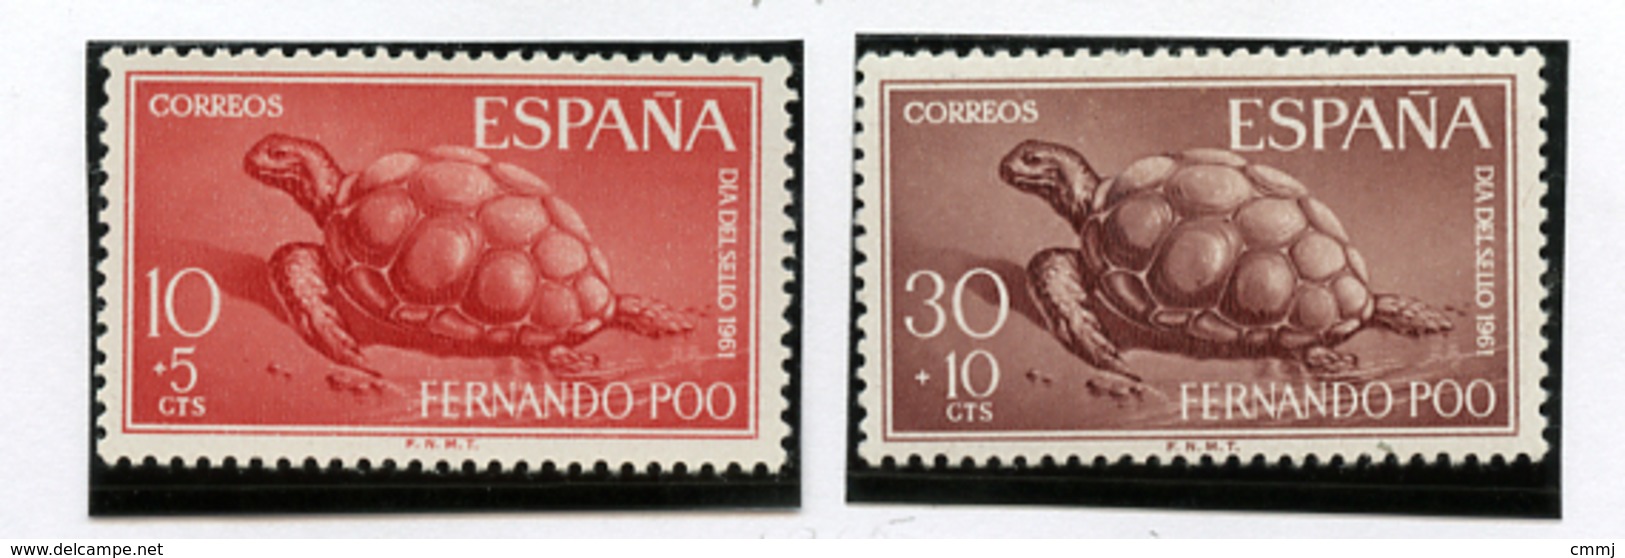 1961 - FERNANDO POO (ESPANA) - Mi. Nr. 199/200 -  LH - (*) - (UP.70.1) - Fernando Poo